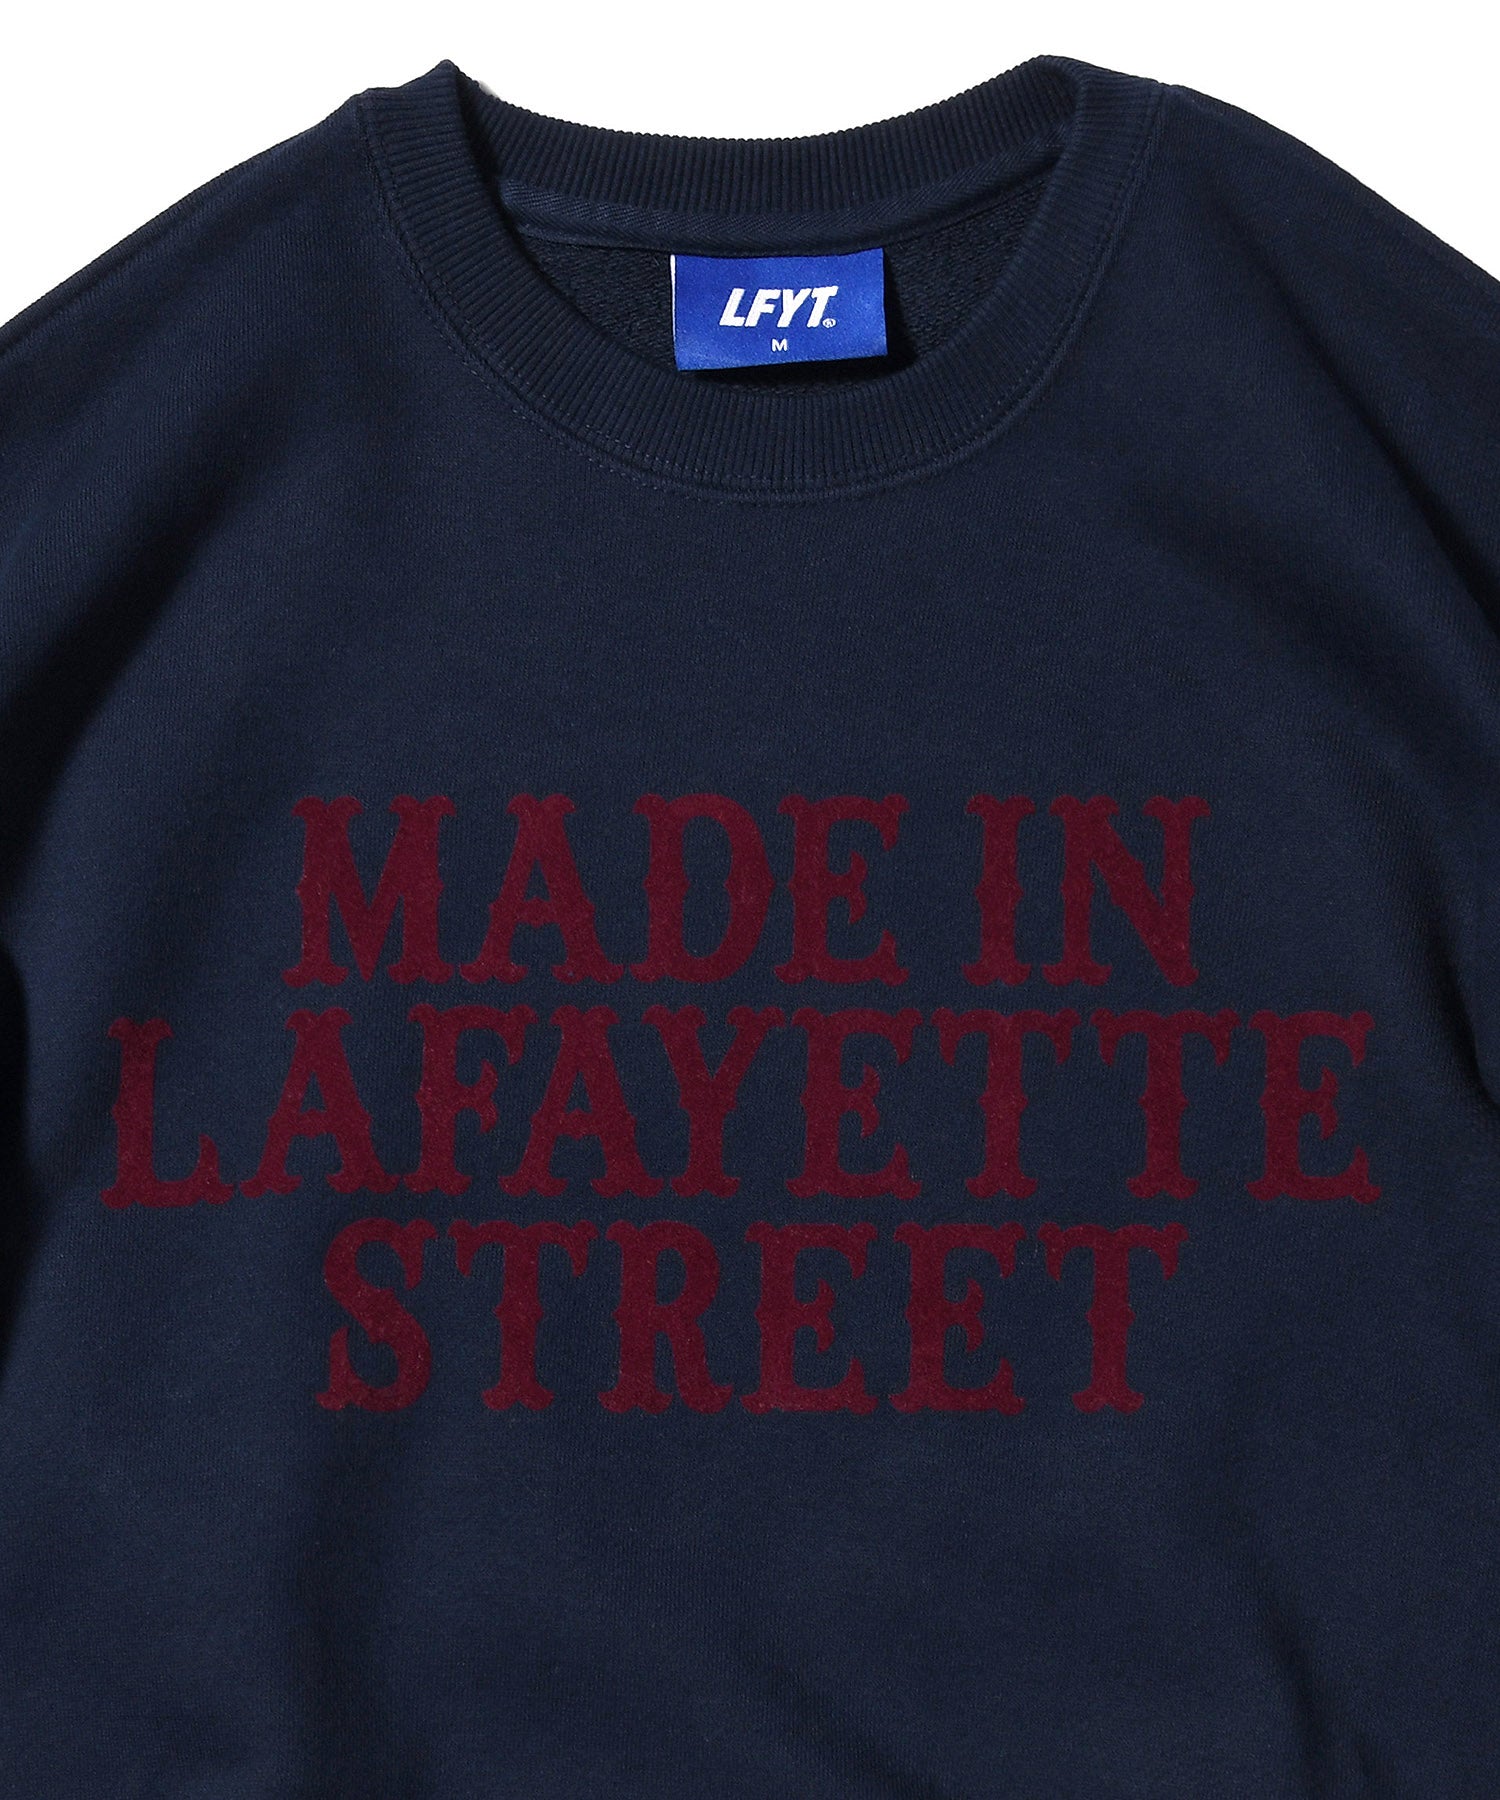 【KIDS】LFYT MADE IN LAFAYETTE KIDS STREET CREWNECK SWEAT LE230711